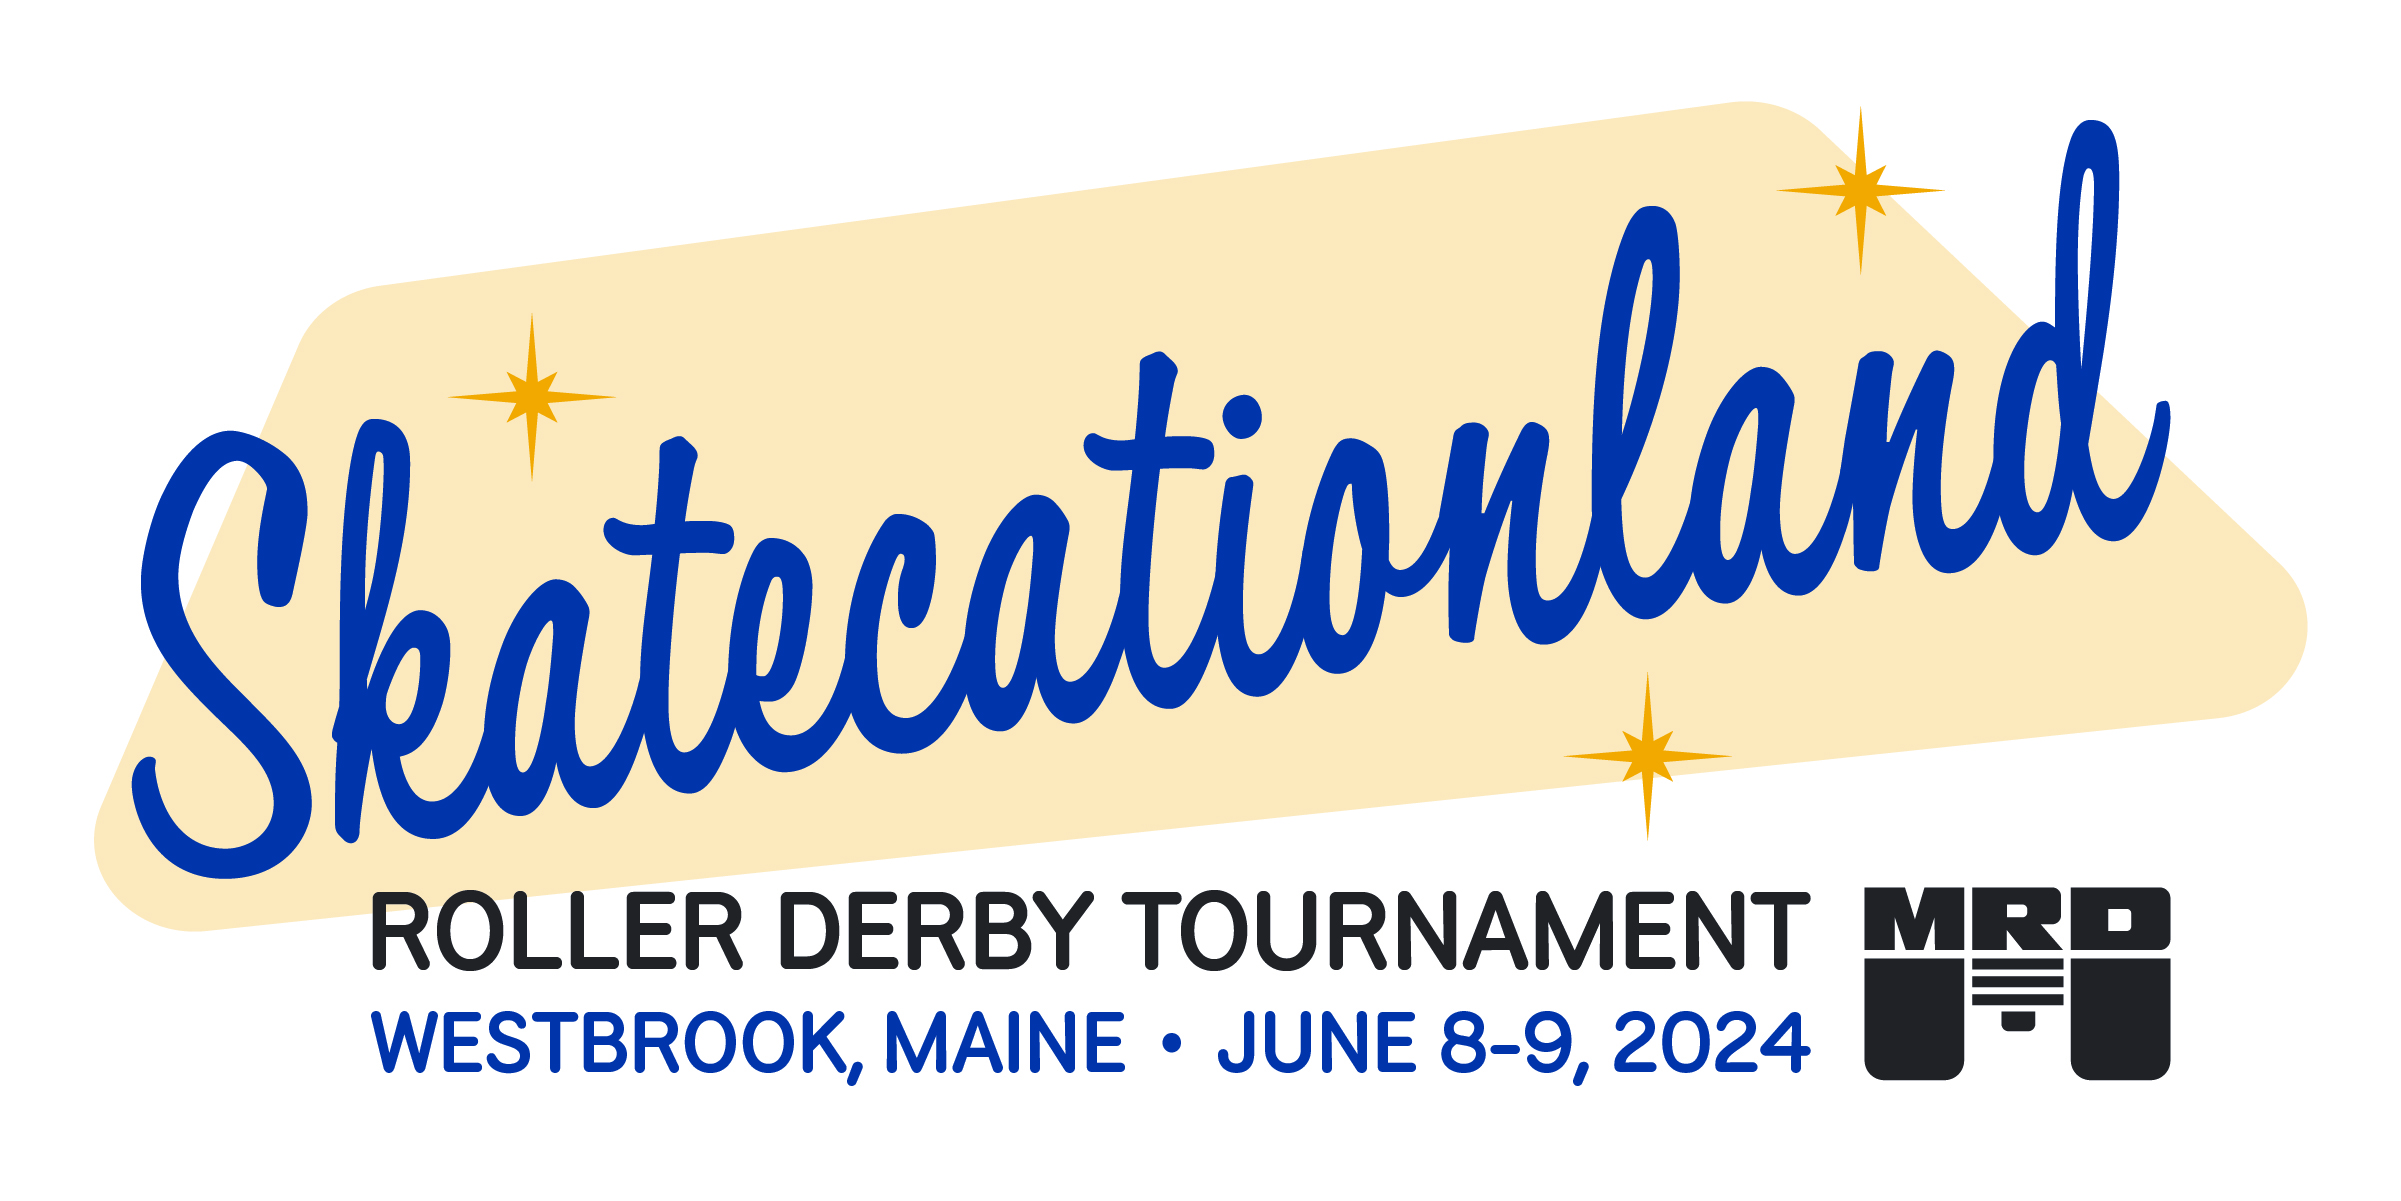 Skatecationland Roller Derby Tournament June 8-9, 2024